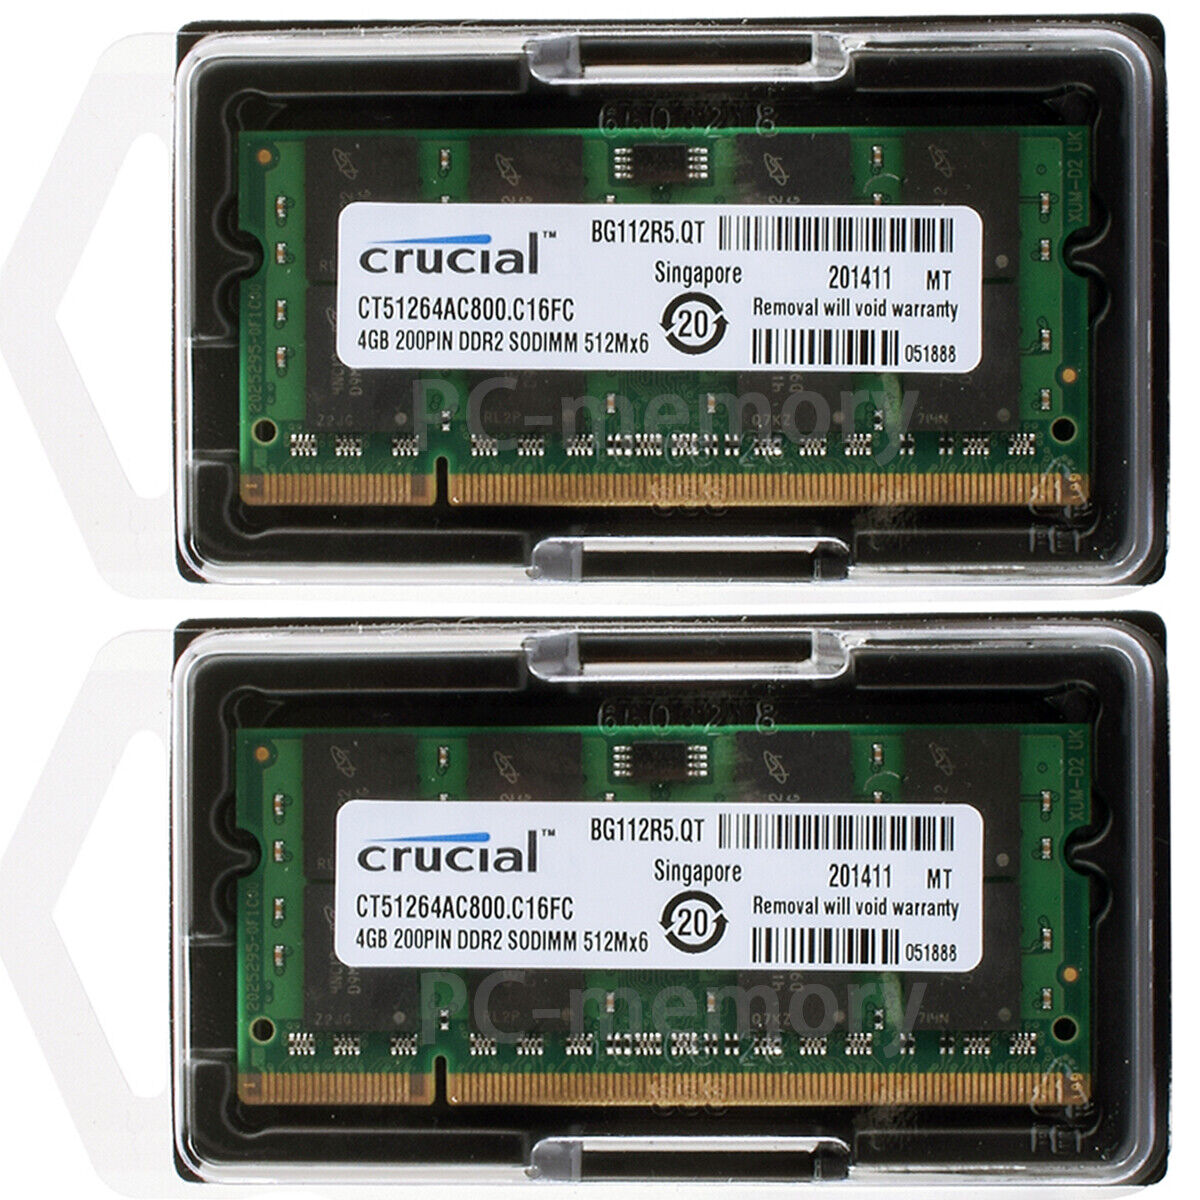  Crucial 8GB 2x 4GB PC2-6400 DDR2 800MHz Laptop Memory 200PIN CT51264AC800.C16FC